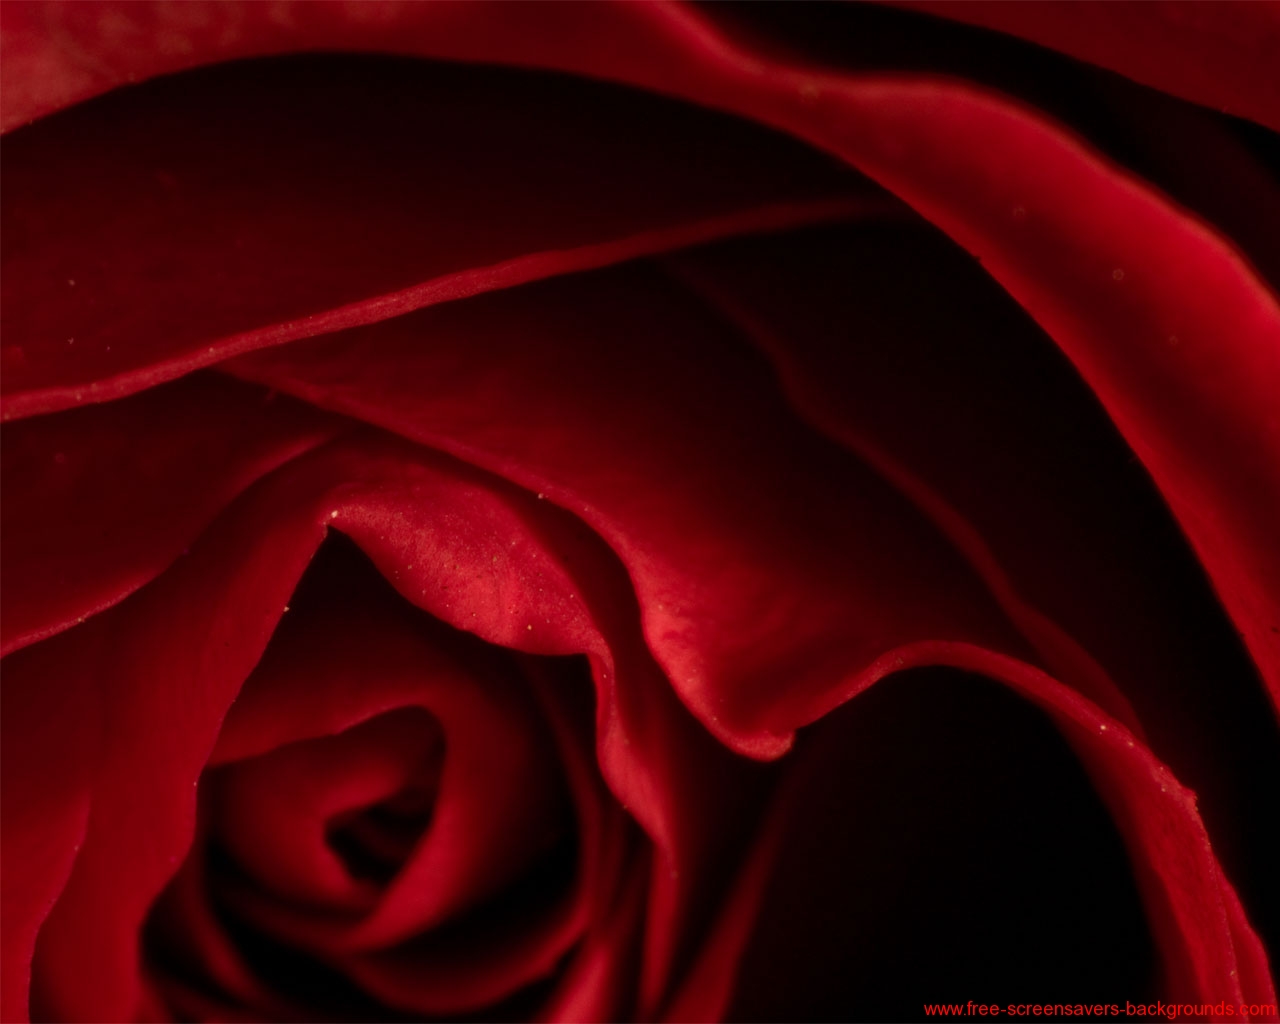 rosa roja live wallpaper descarga gratuita,rojo,rosas de jardín,rosa,pétalo,de cerca